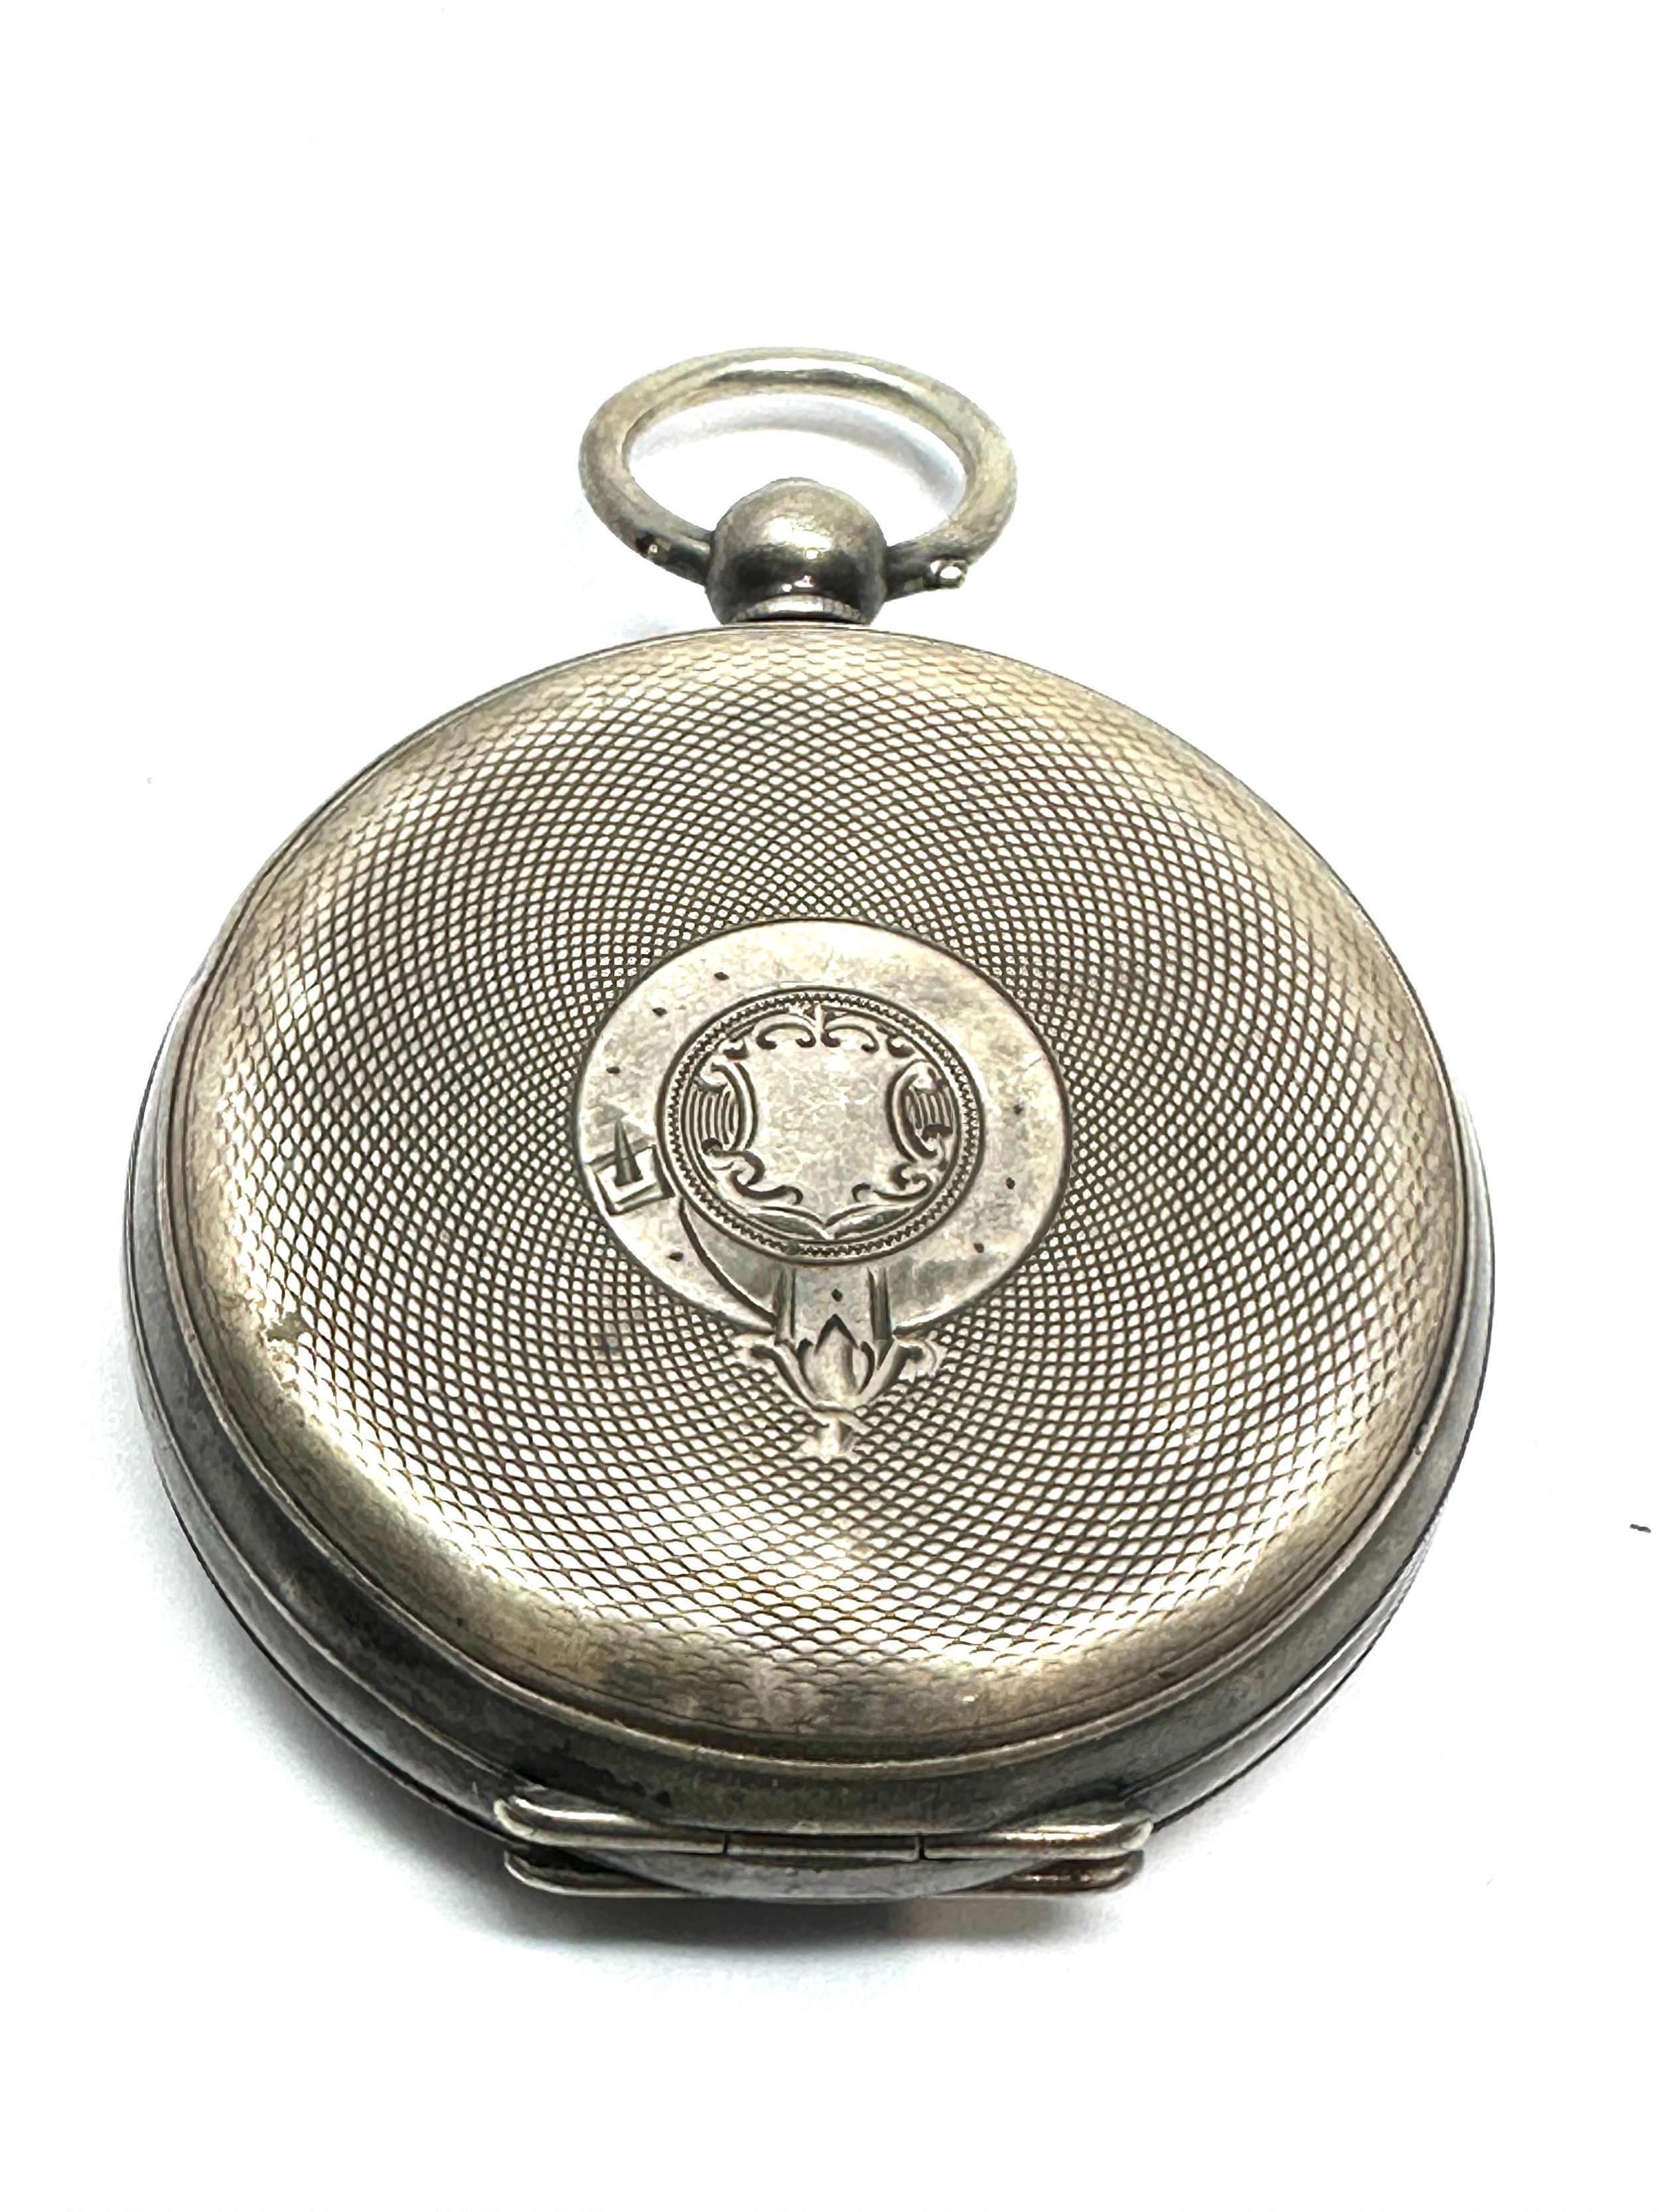 Vintage Gents Sterling Silver Pocket Watch Key-wind Working - Image 2 of 3